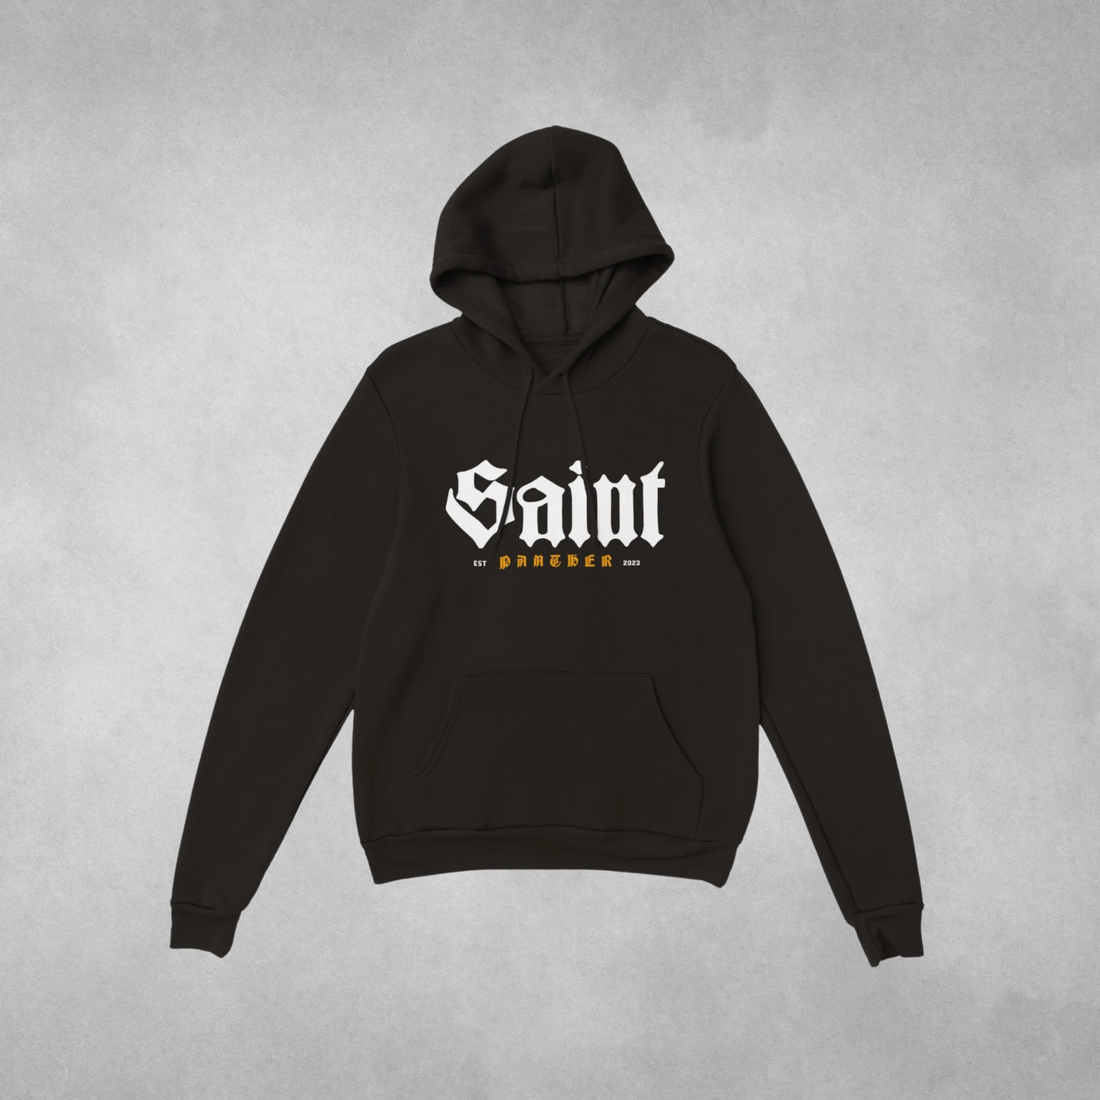 Saint Panther - Original Hoodie - Black